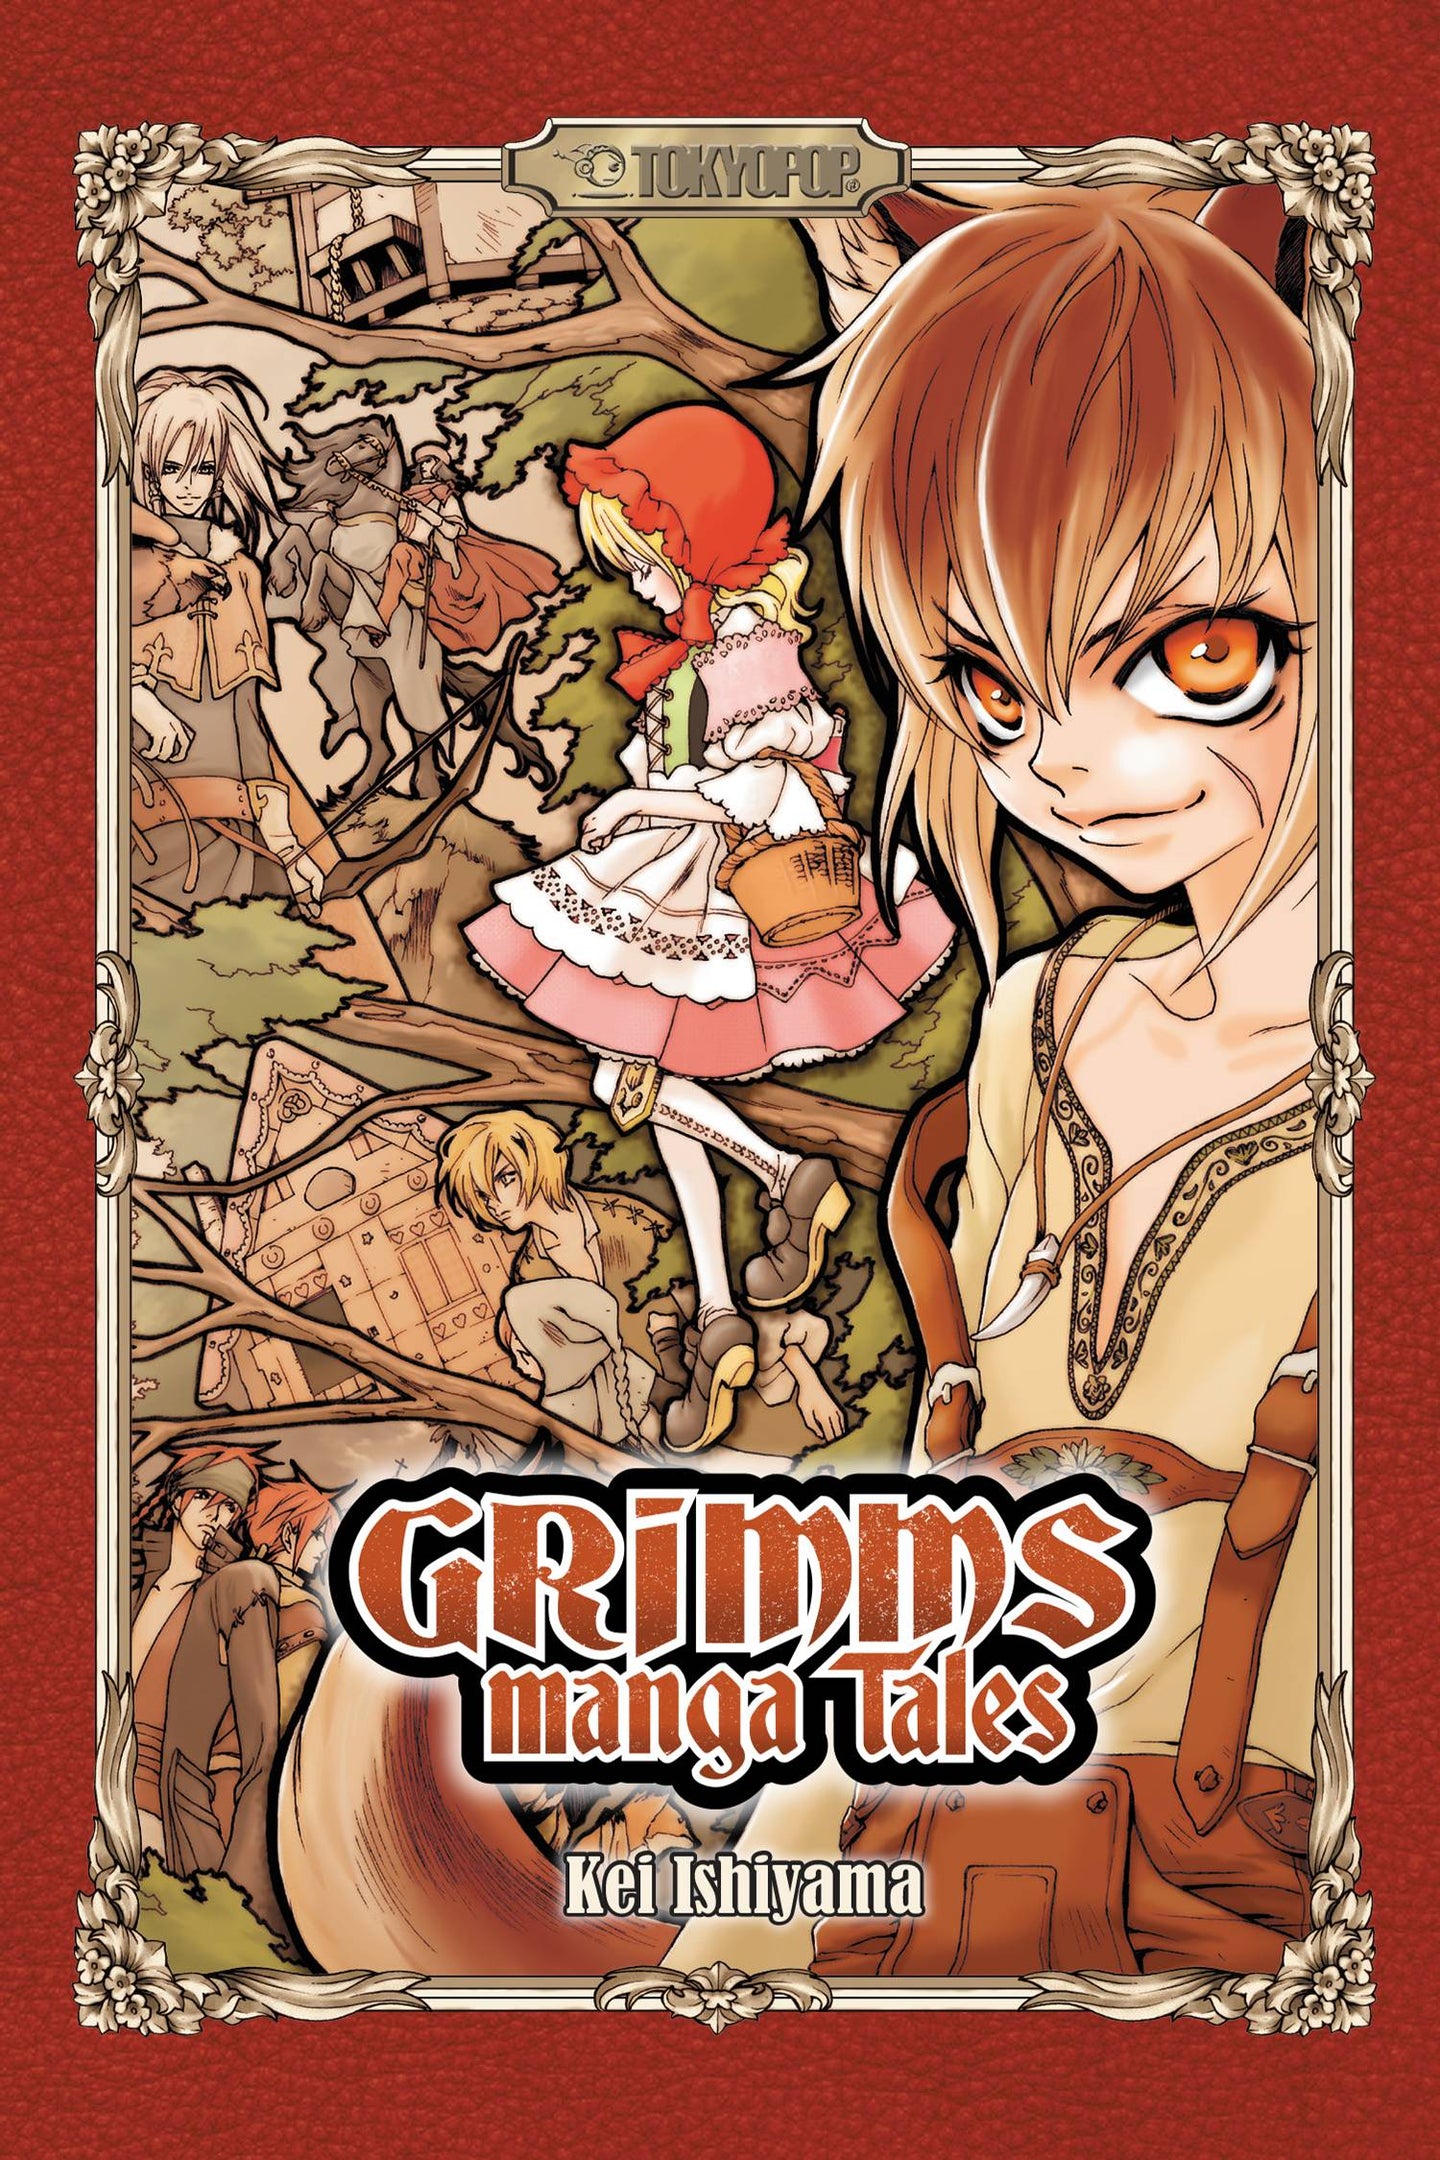 Grimms Manga Tales Graphic Novel